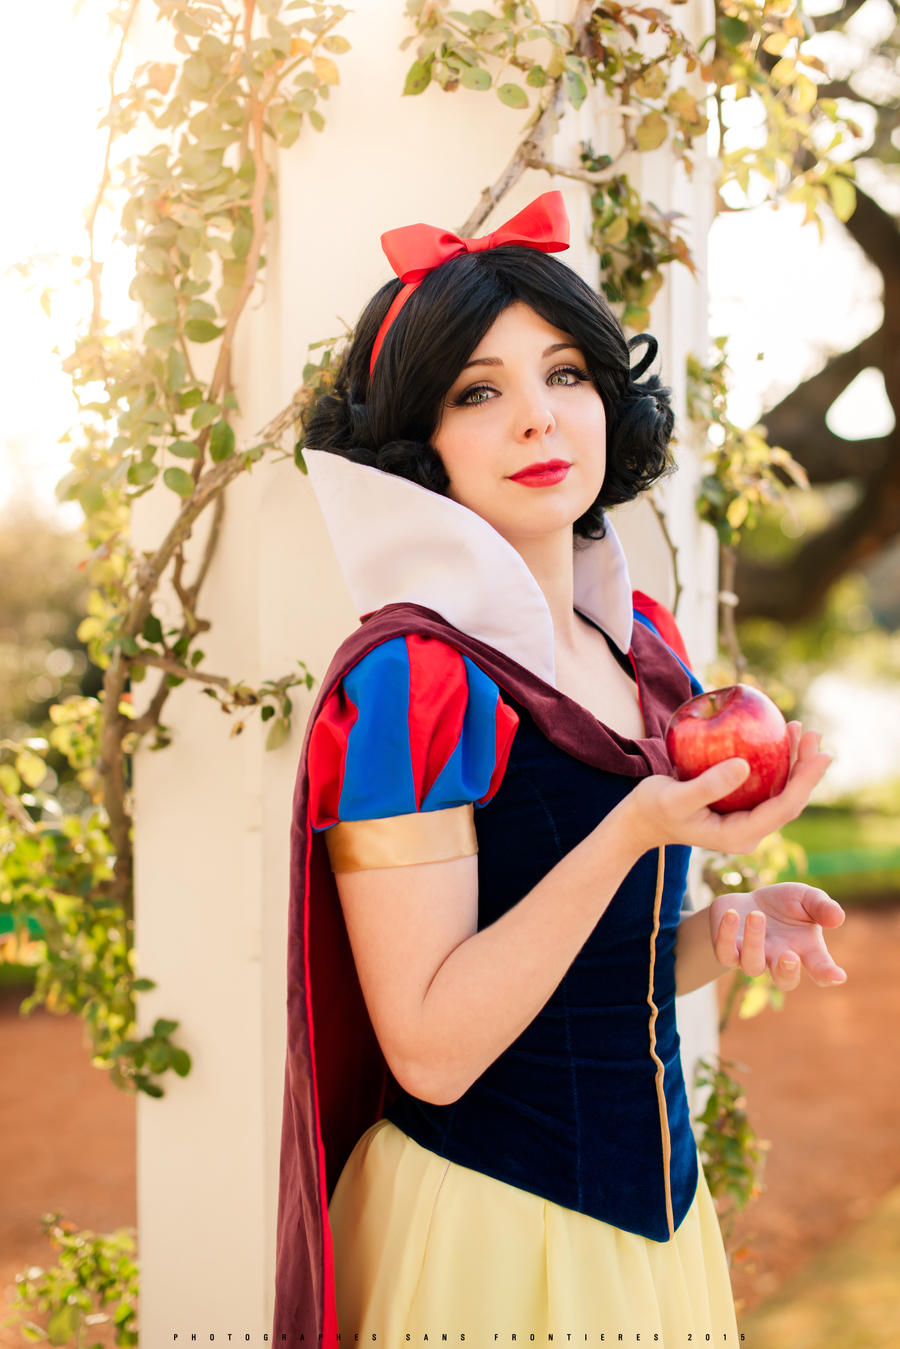 dress cosplay Snow white